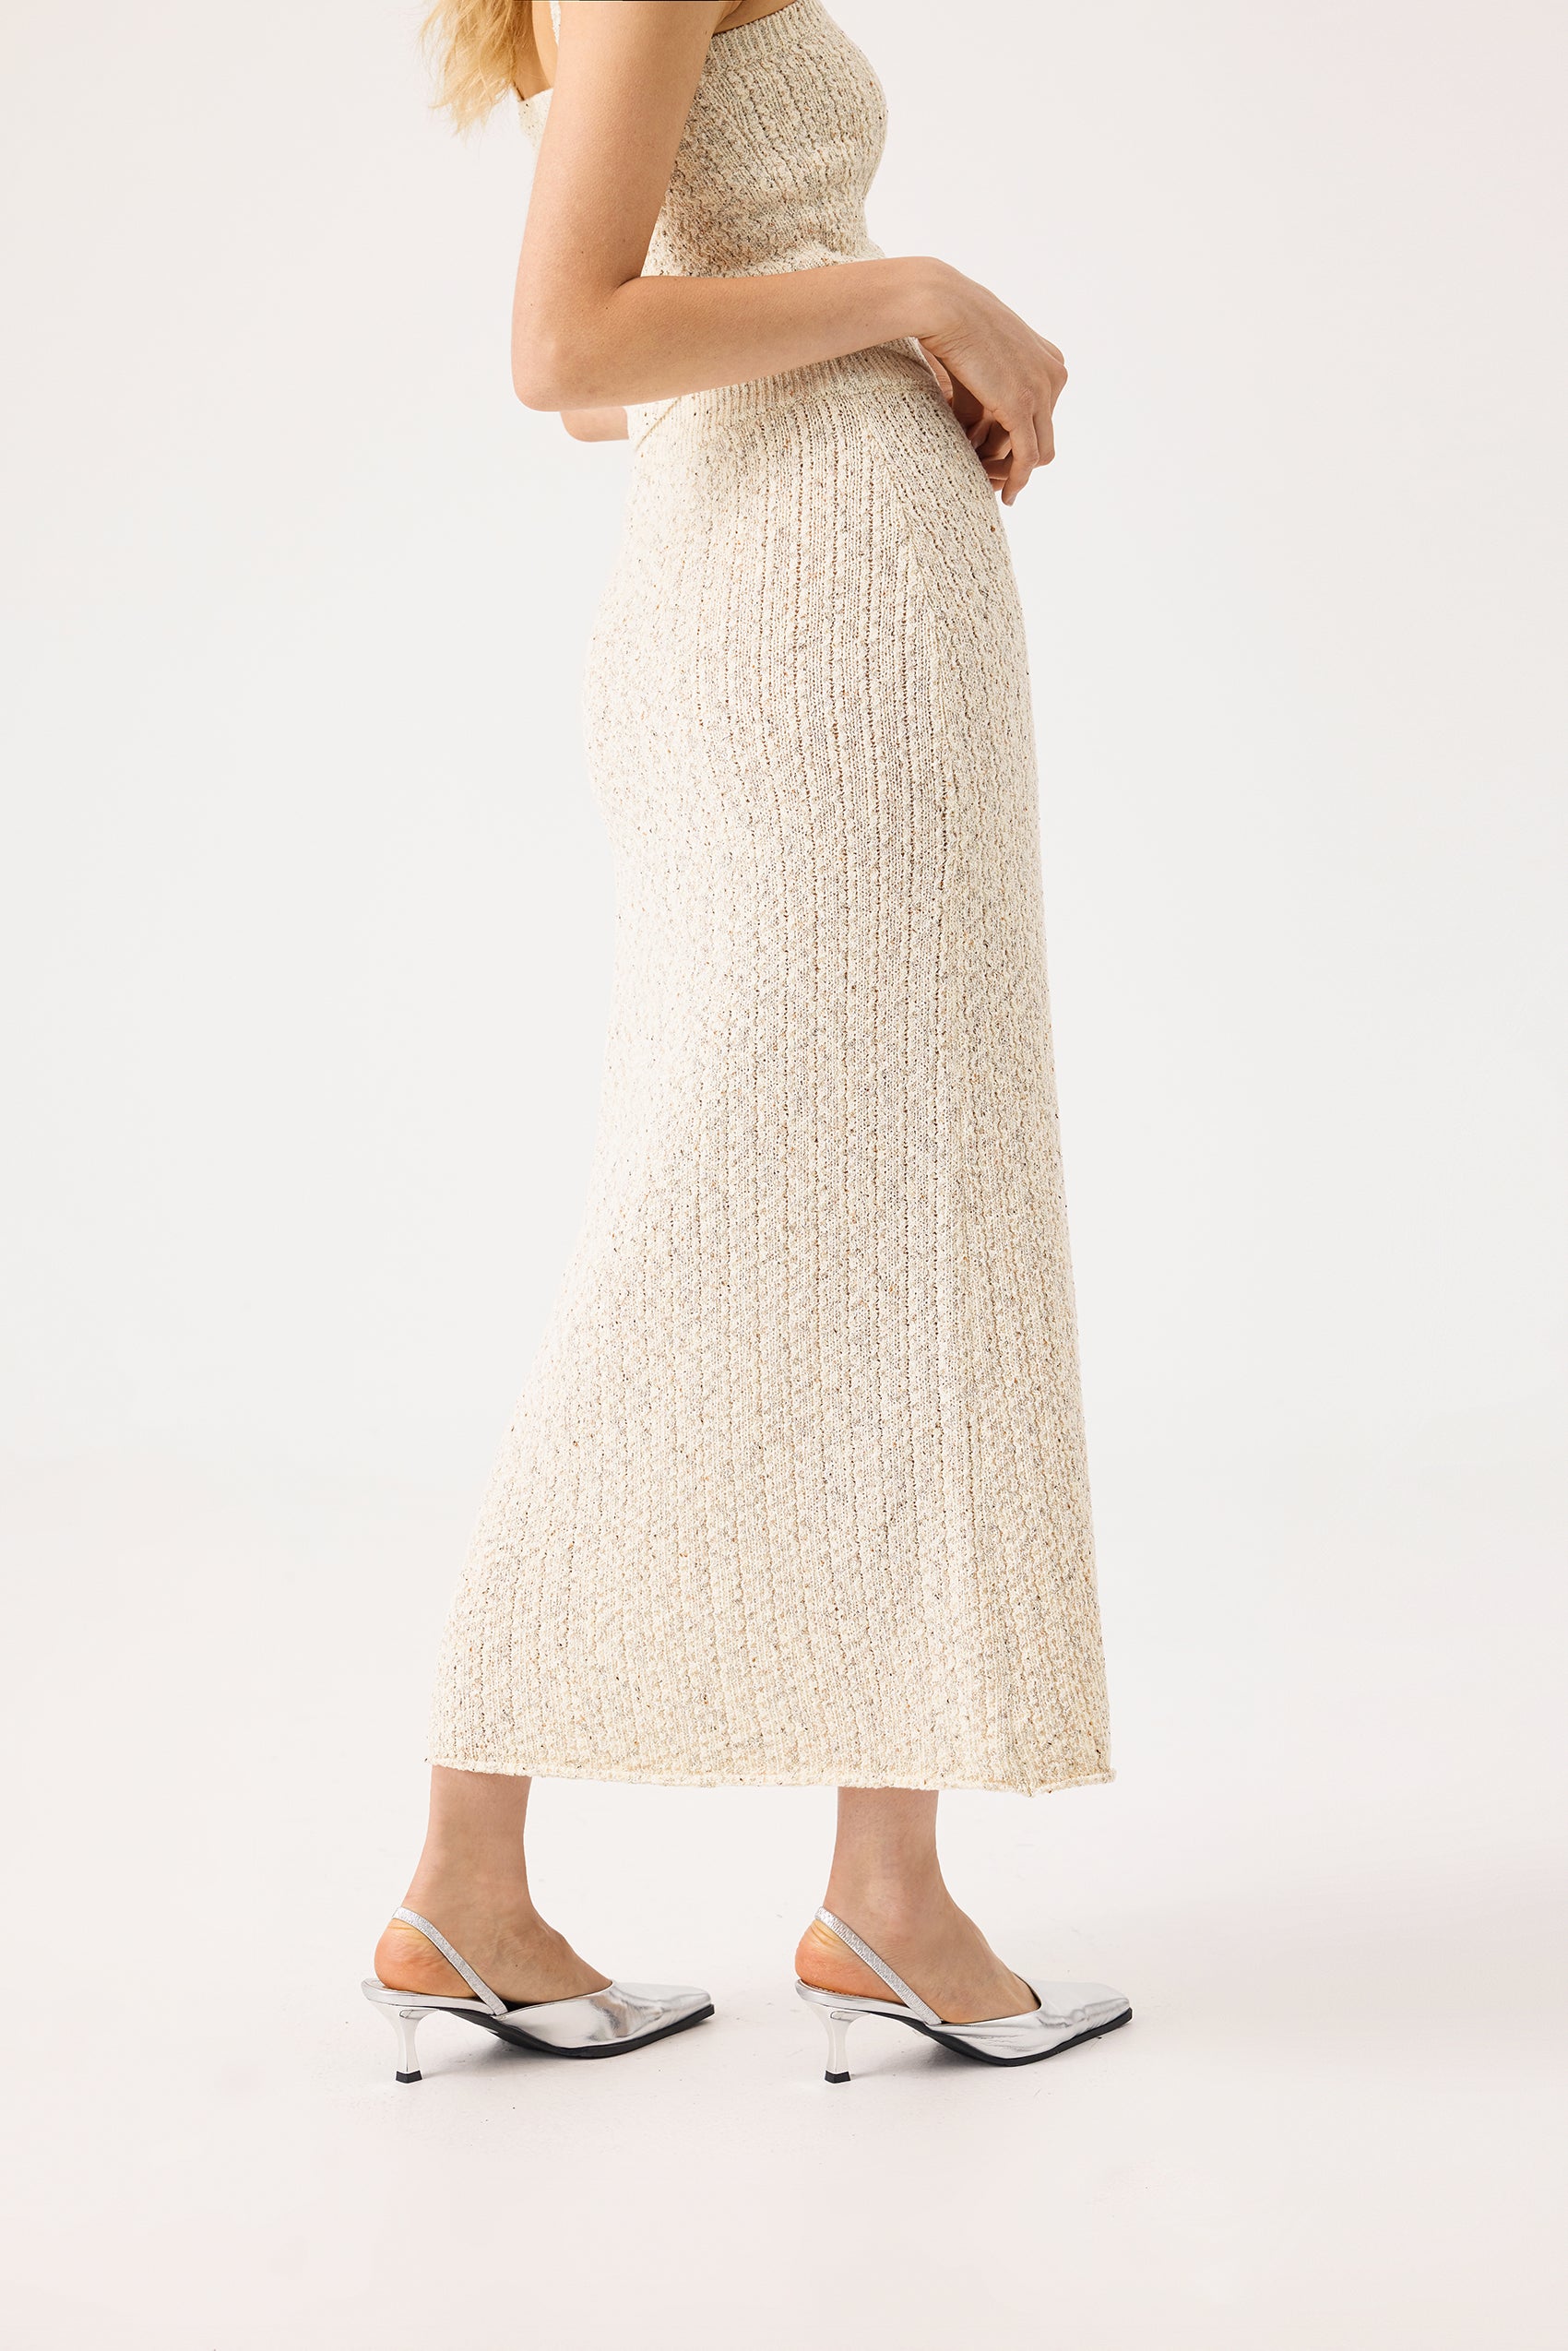 Pointelle knit pencil skirt